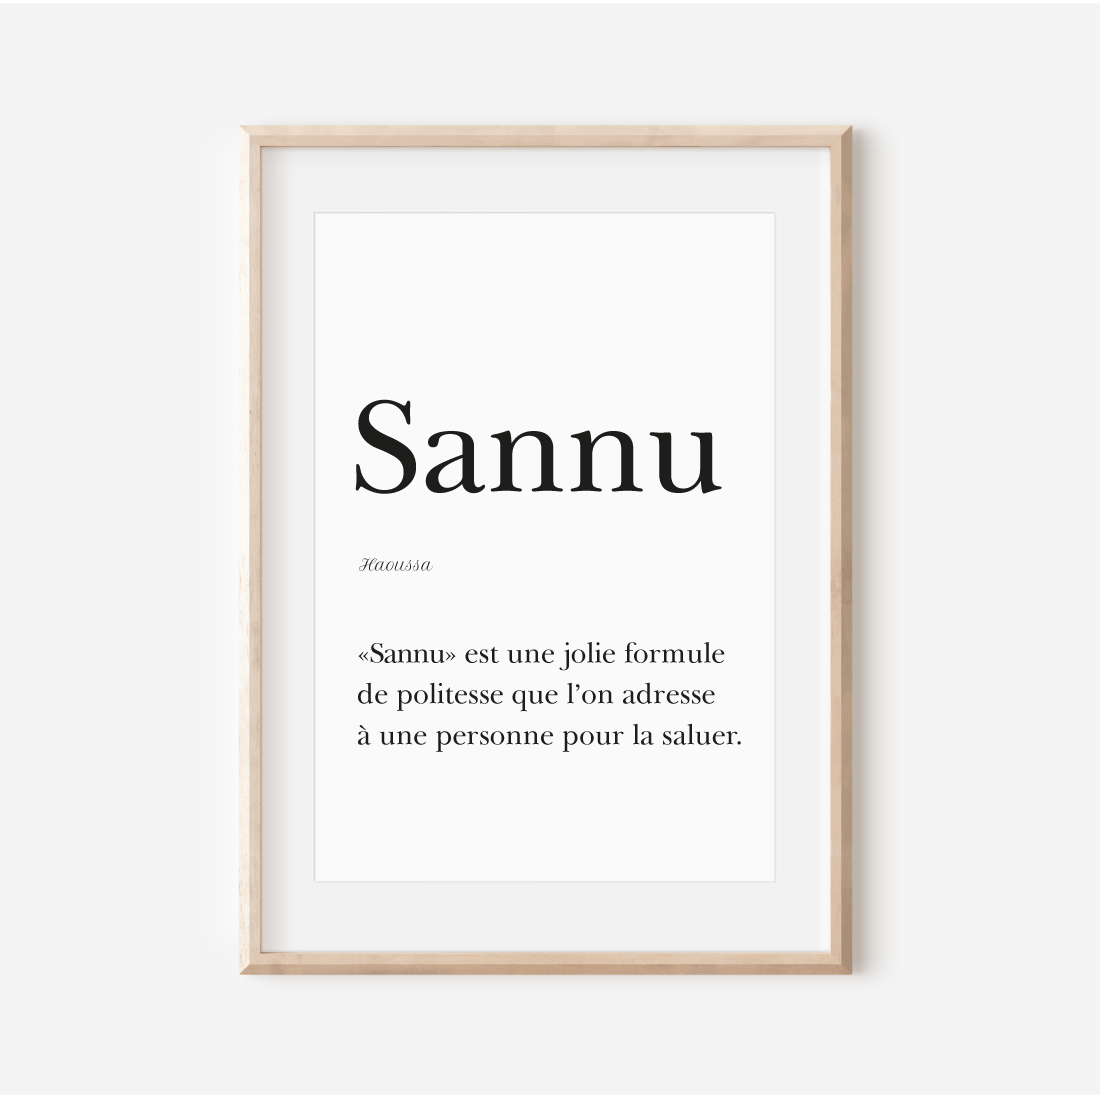 "Sannu" - Greeting in Hausa